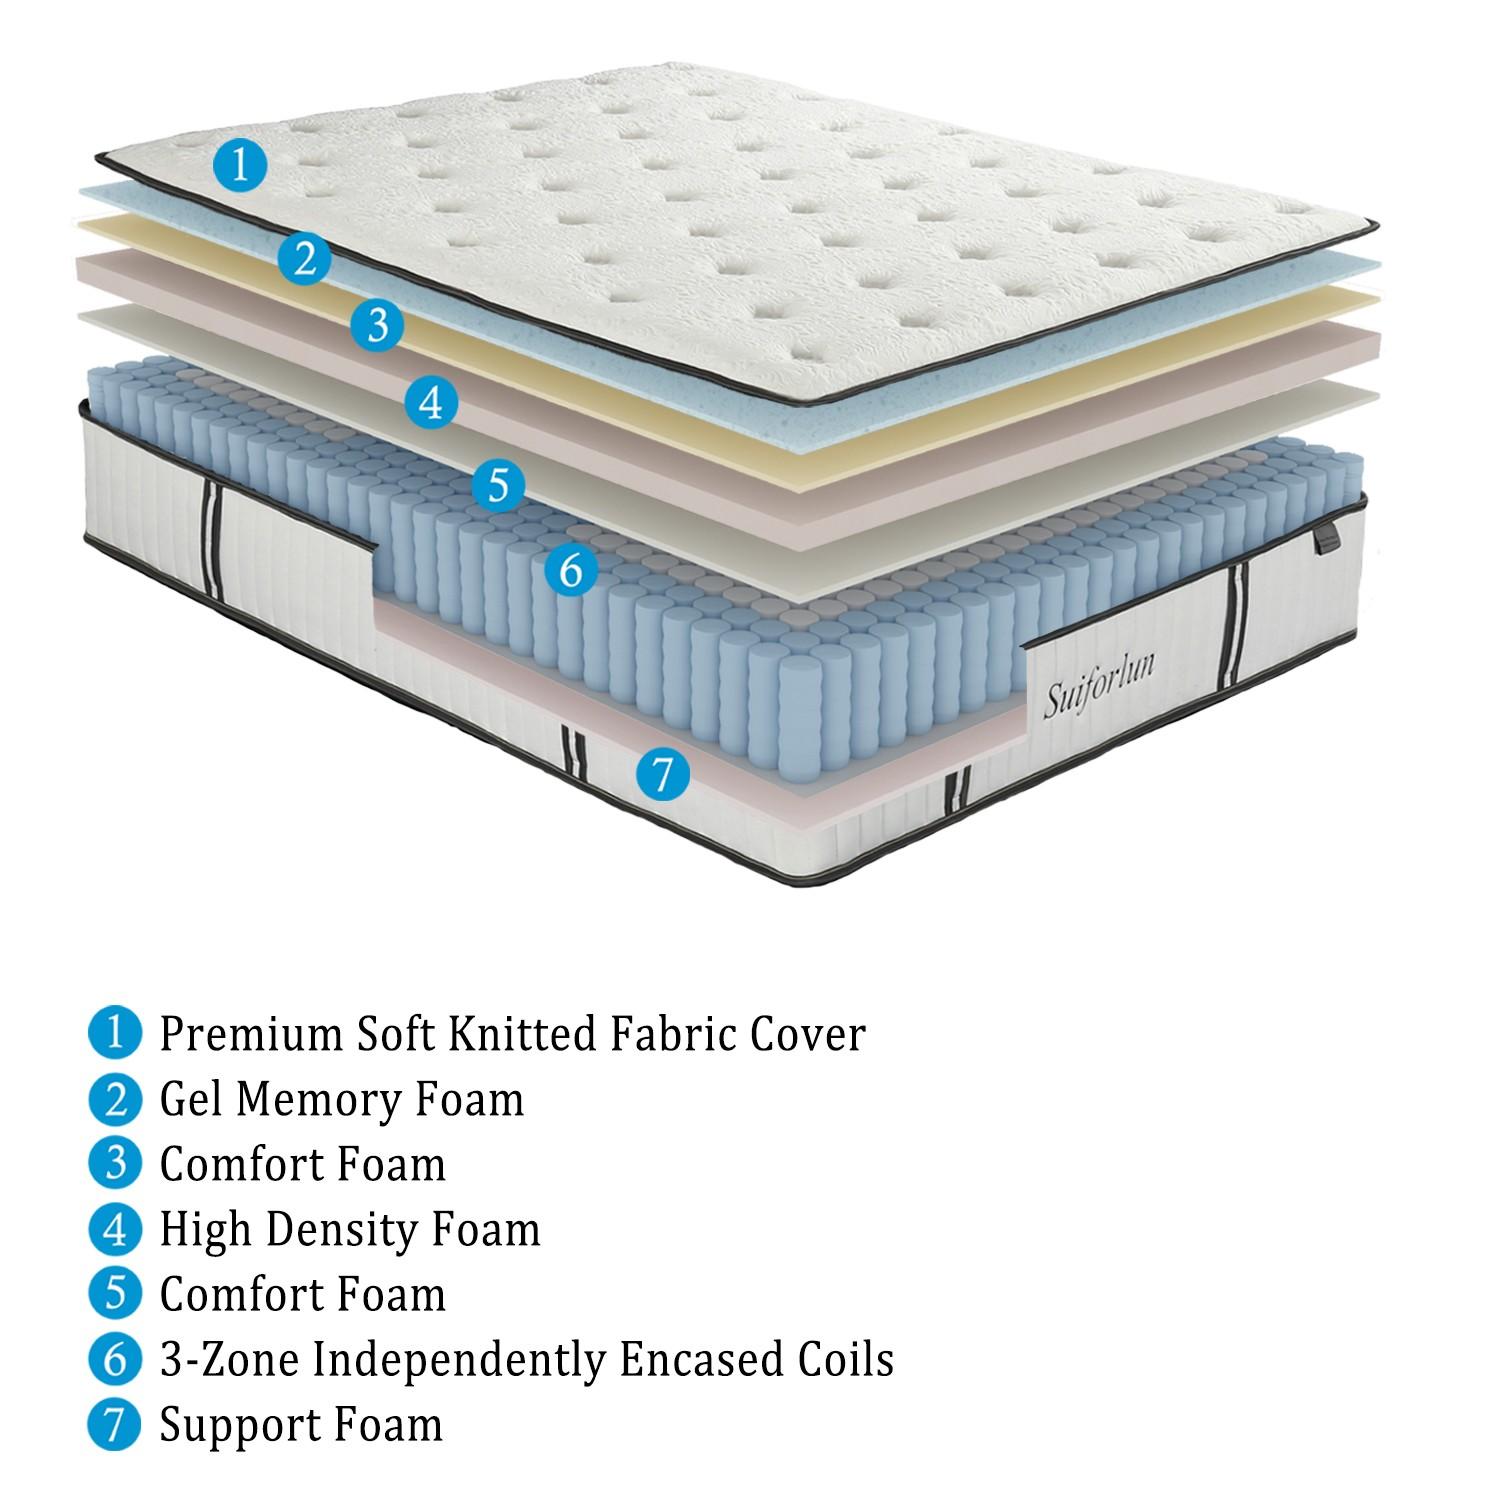 Suiforlun mattress inexpensive latex hybrid mattress